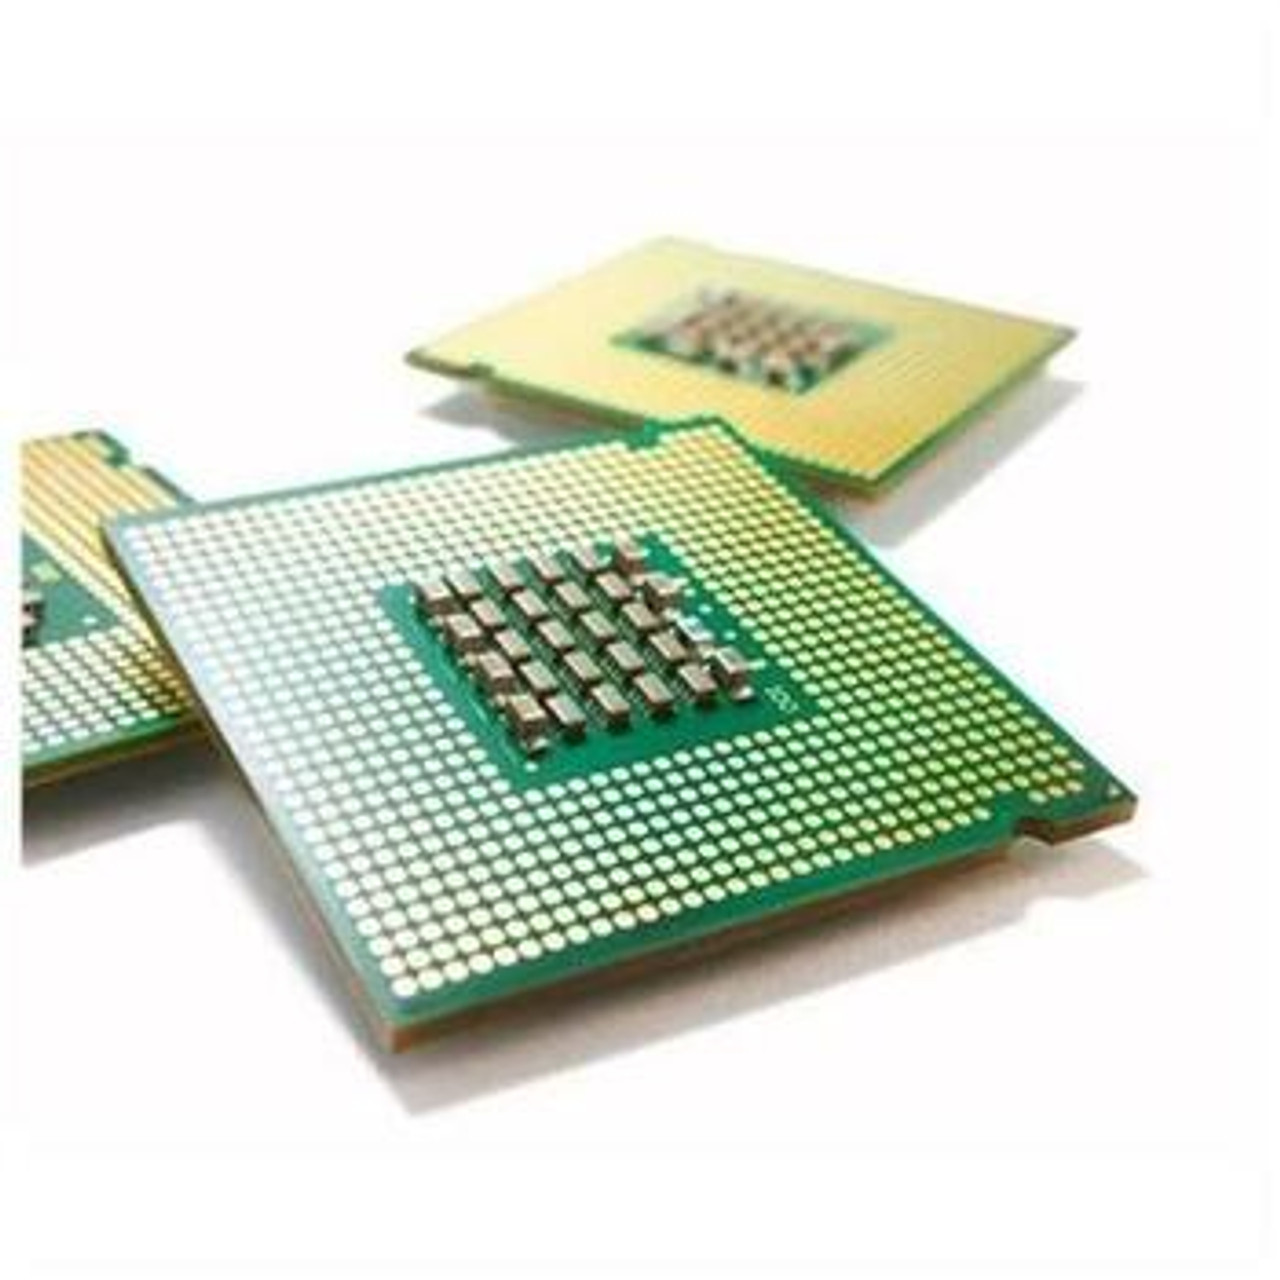 P4X-DPE52650LV3-SR1Y SuperMicro Xeon Processor E5-2650L V3 12 Core 1.80GHz LGA 2011 30 MB L3 Processor